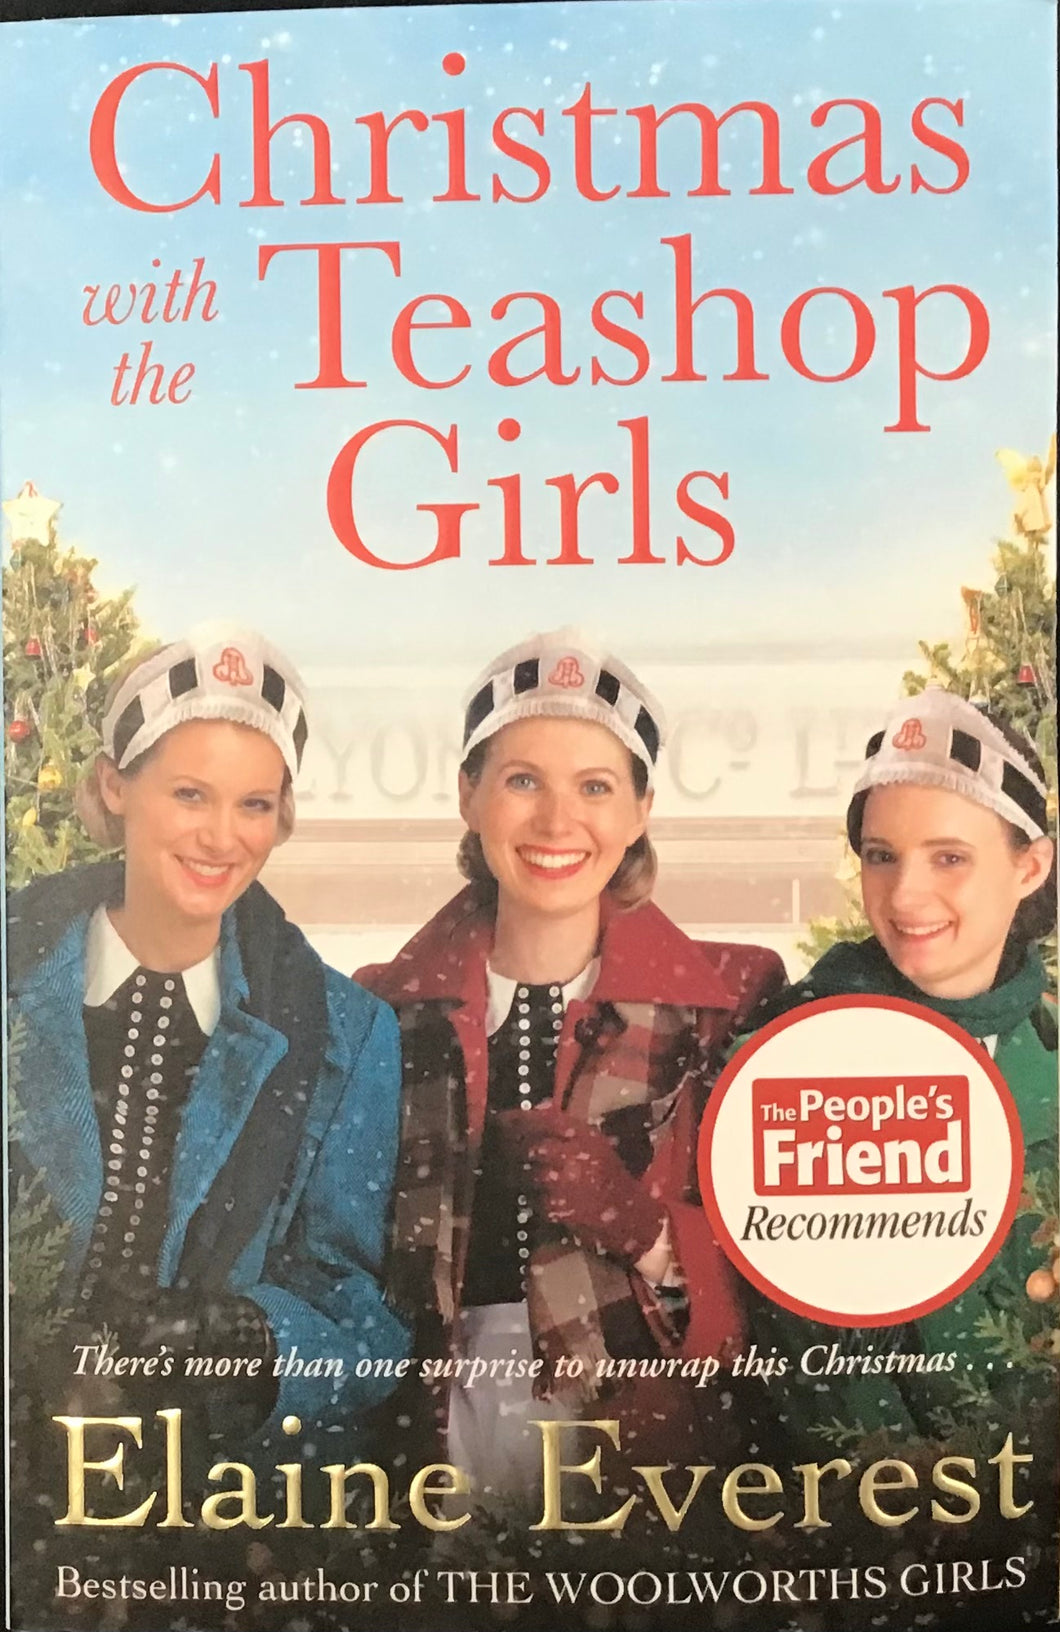 Christmas with the Teashop Girls by Elaine Everest